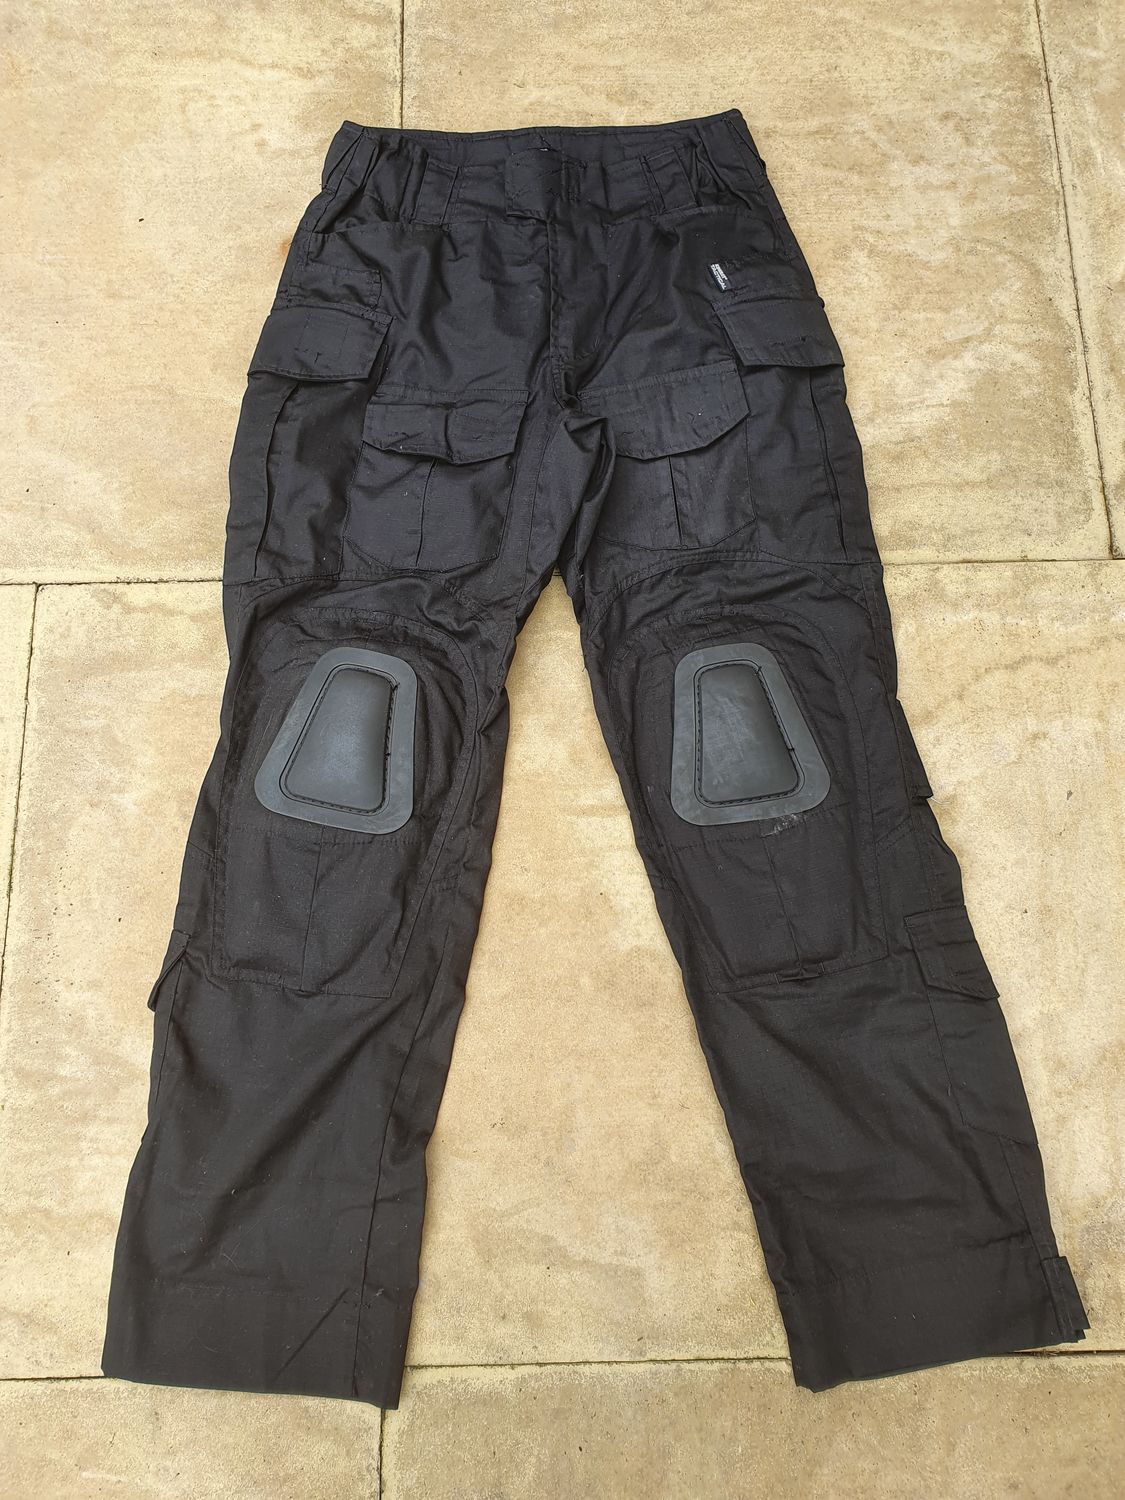 Kombat (M - Black) Combat Trousers - Gear - Airsoft Forums UK